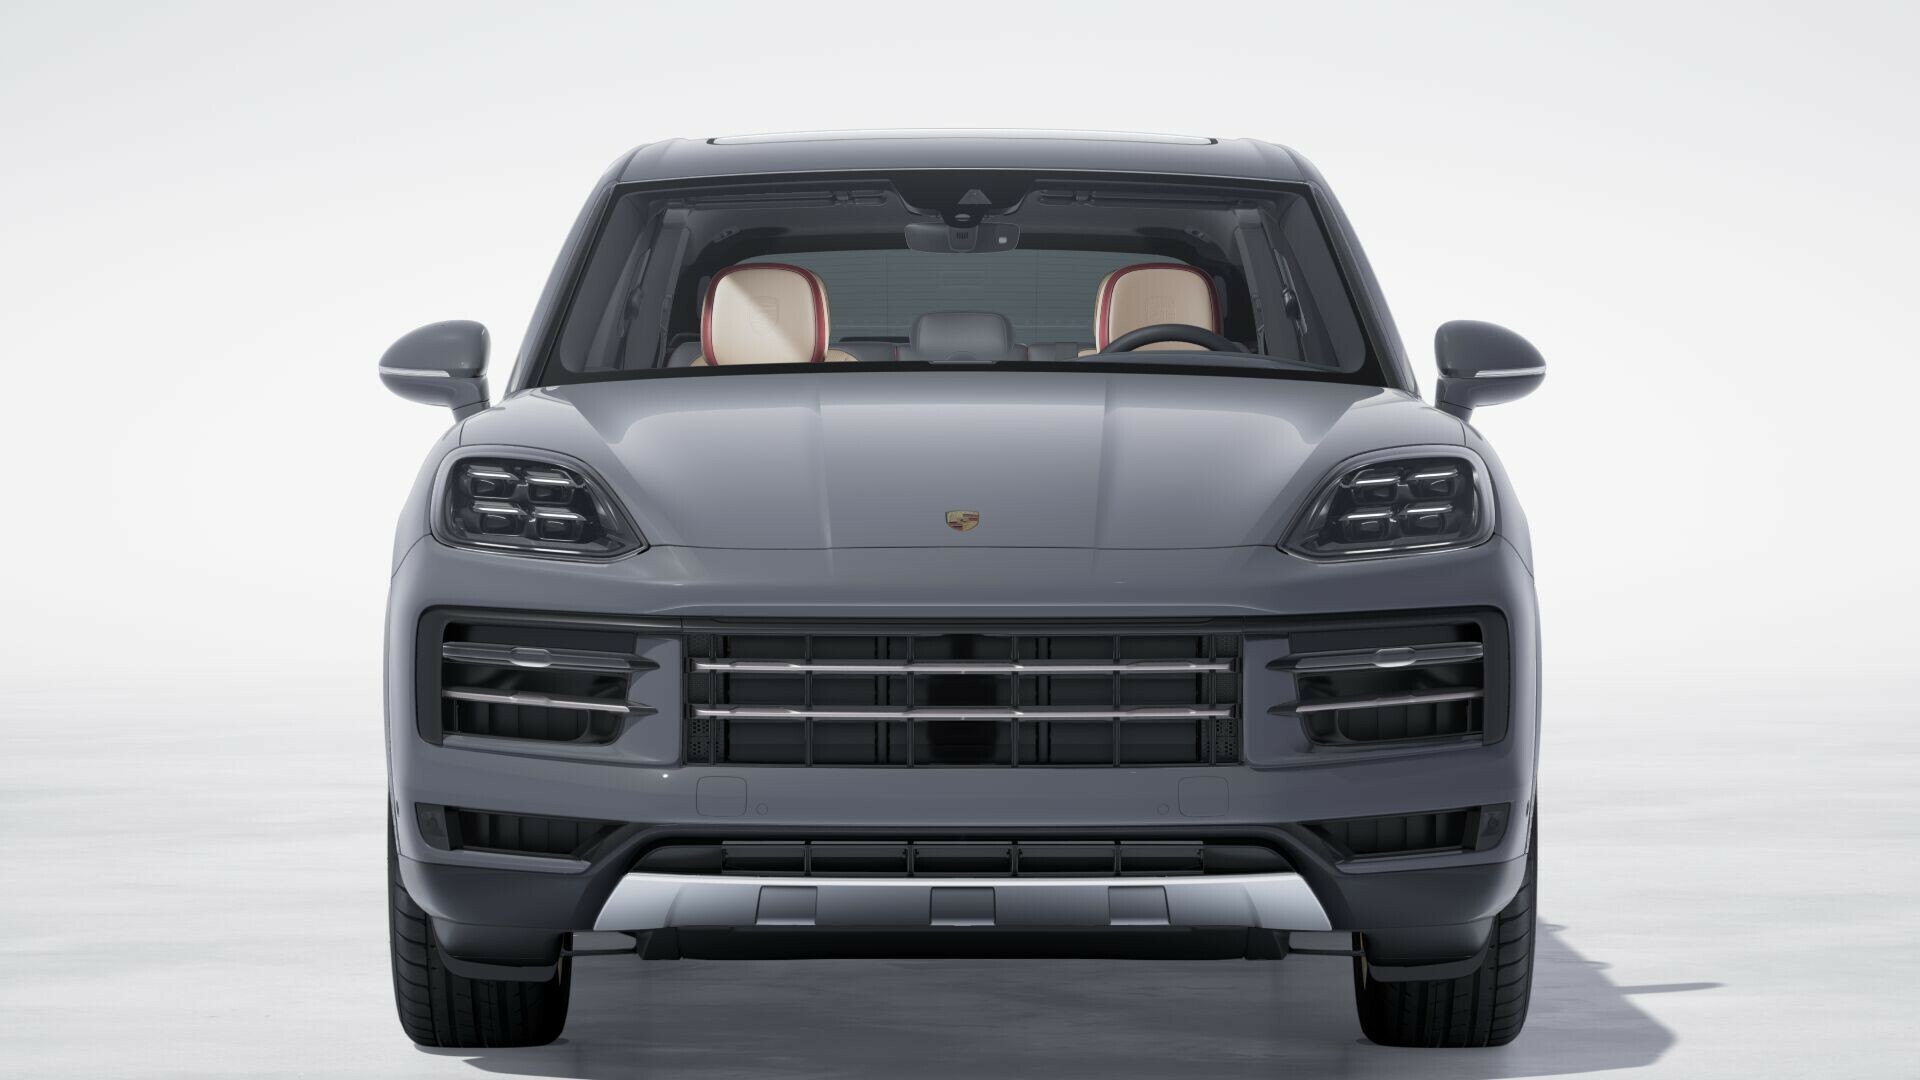 2024 Porsche Cayenne Configurator Goes Live, Reveals Passenger Display